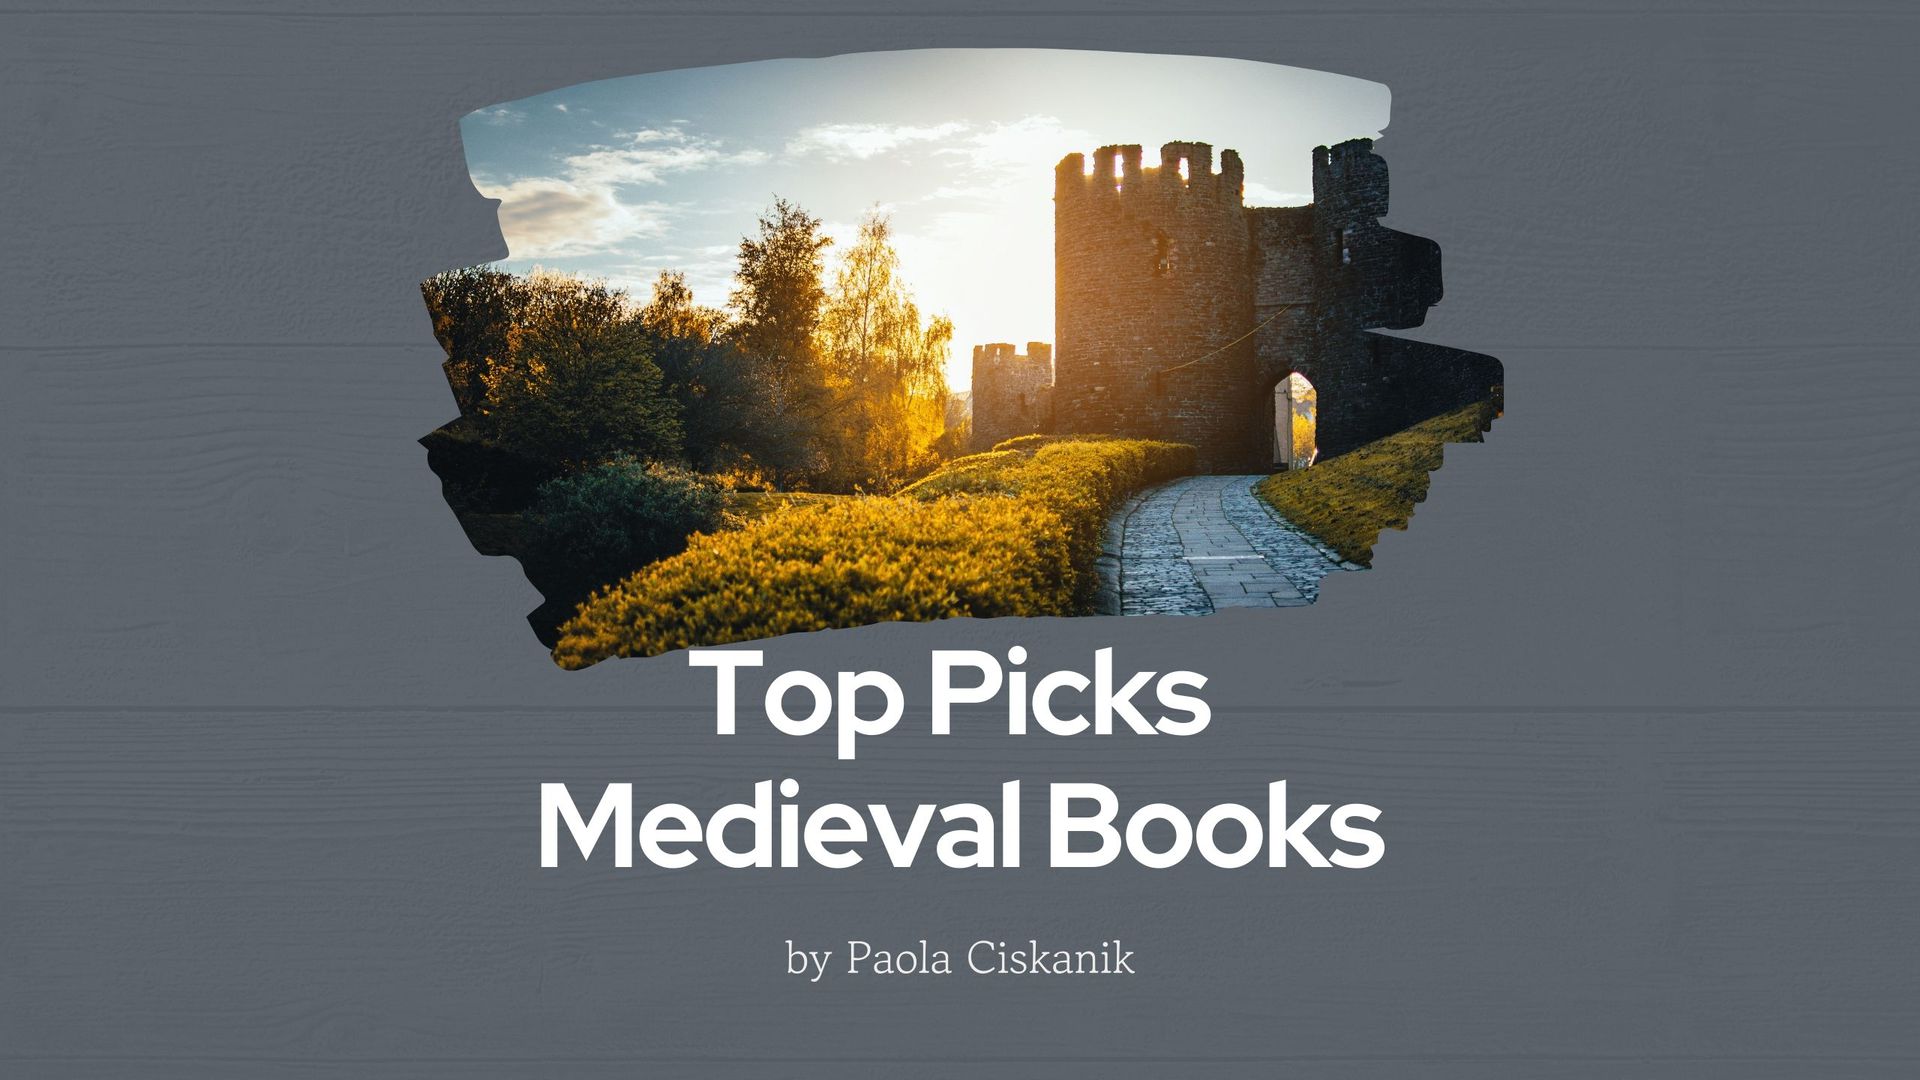 Top Picks Medieval Books